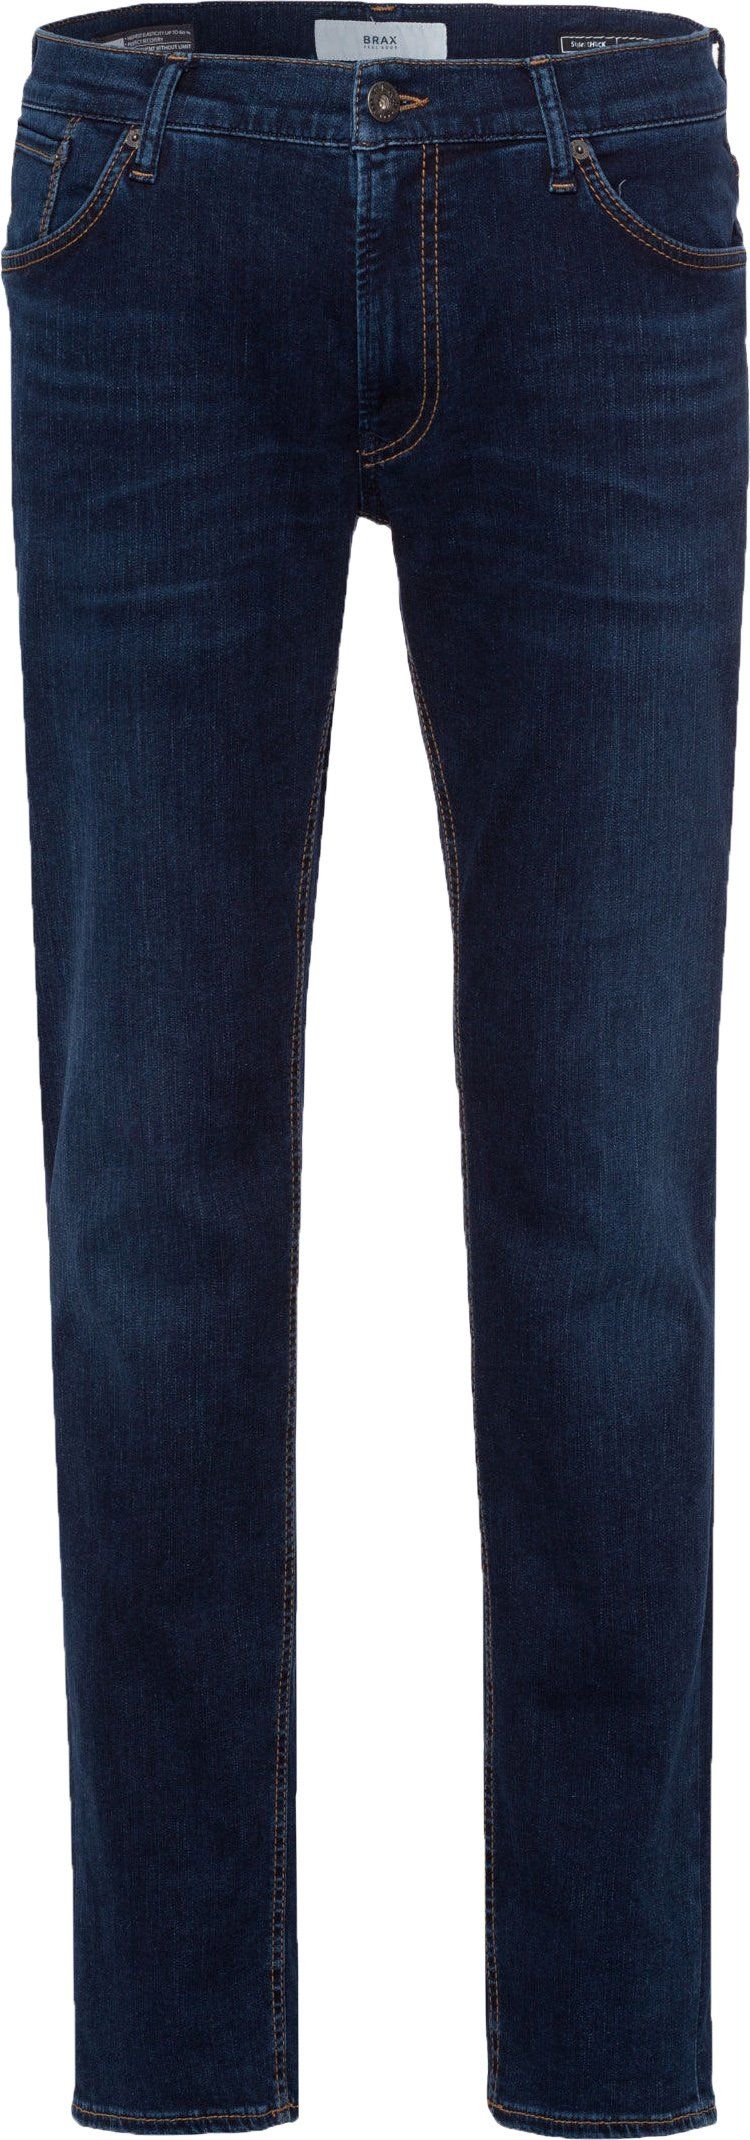 Brax Chuck Denim Jeans Blue size W 30